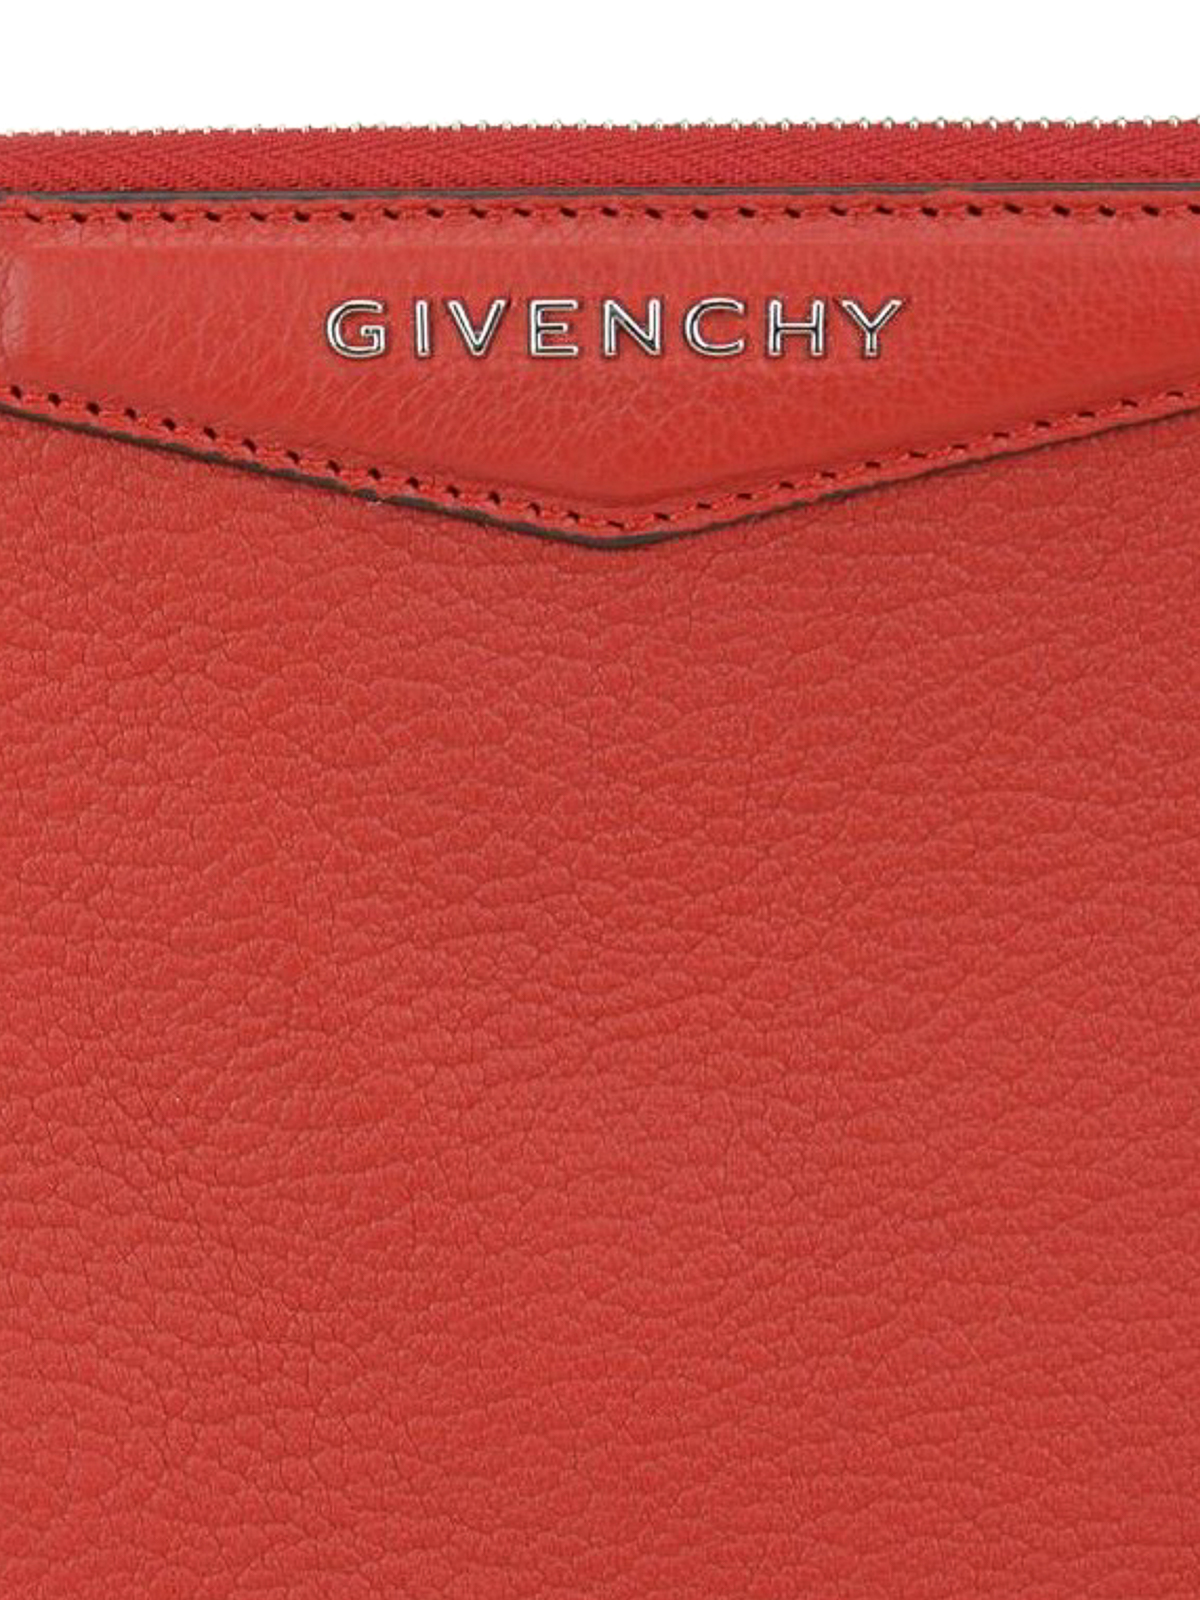 Givenchy - Antigona Grained Leather Envelope Clutch Burgundy